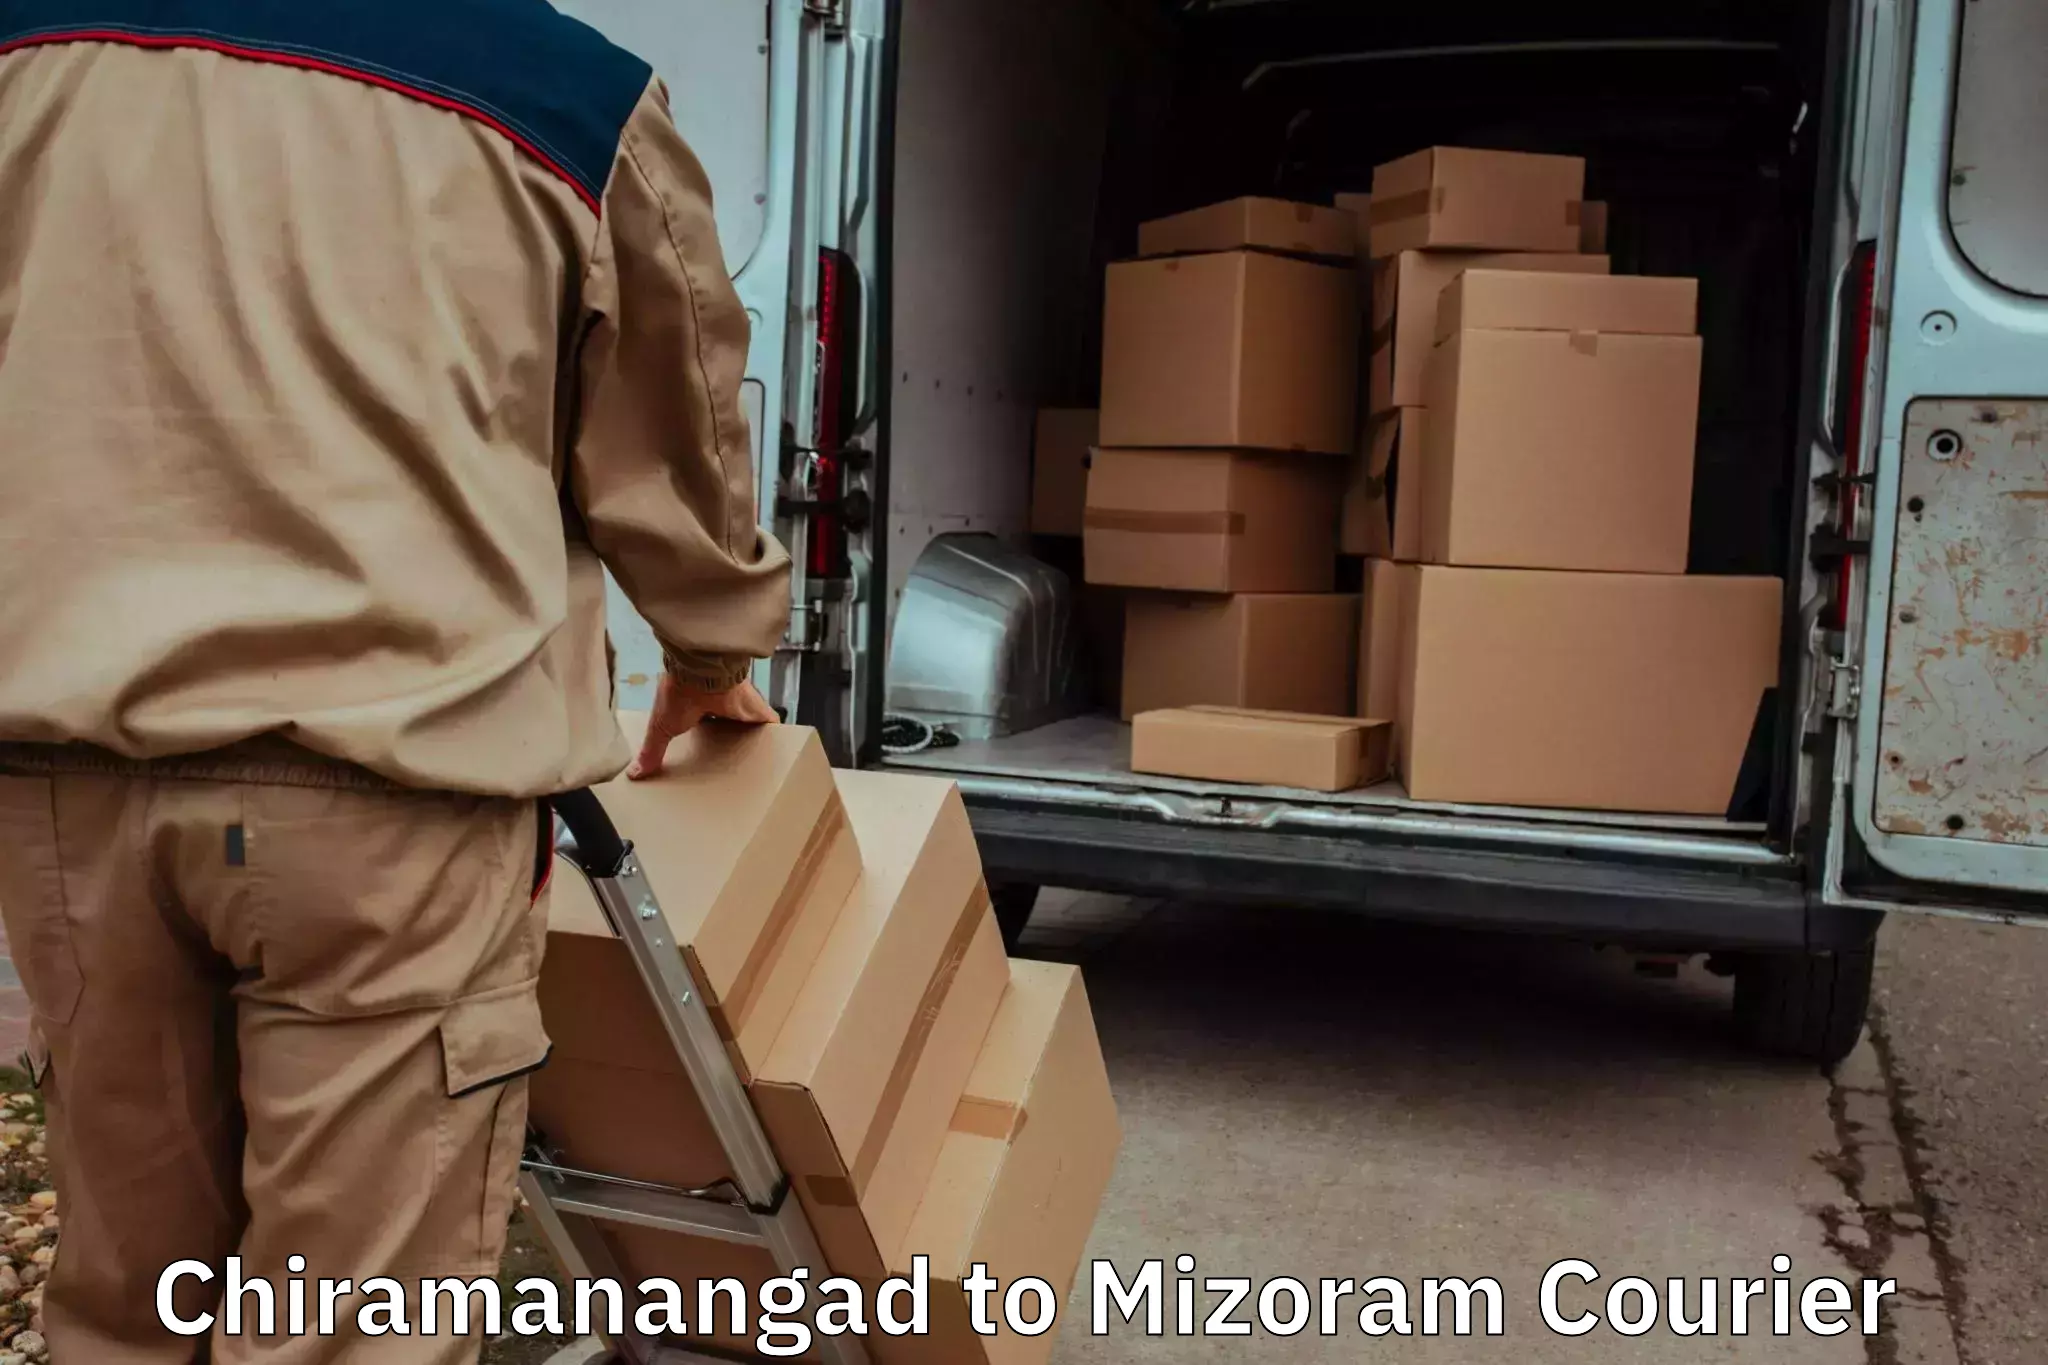 Moving and storage services Chiramanangad to Mizoram